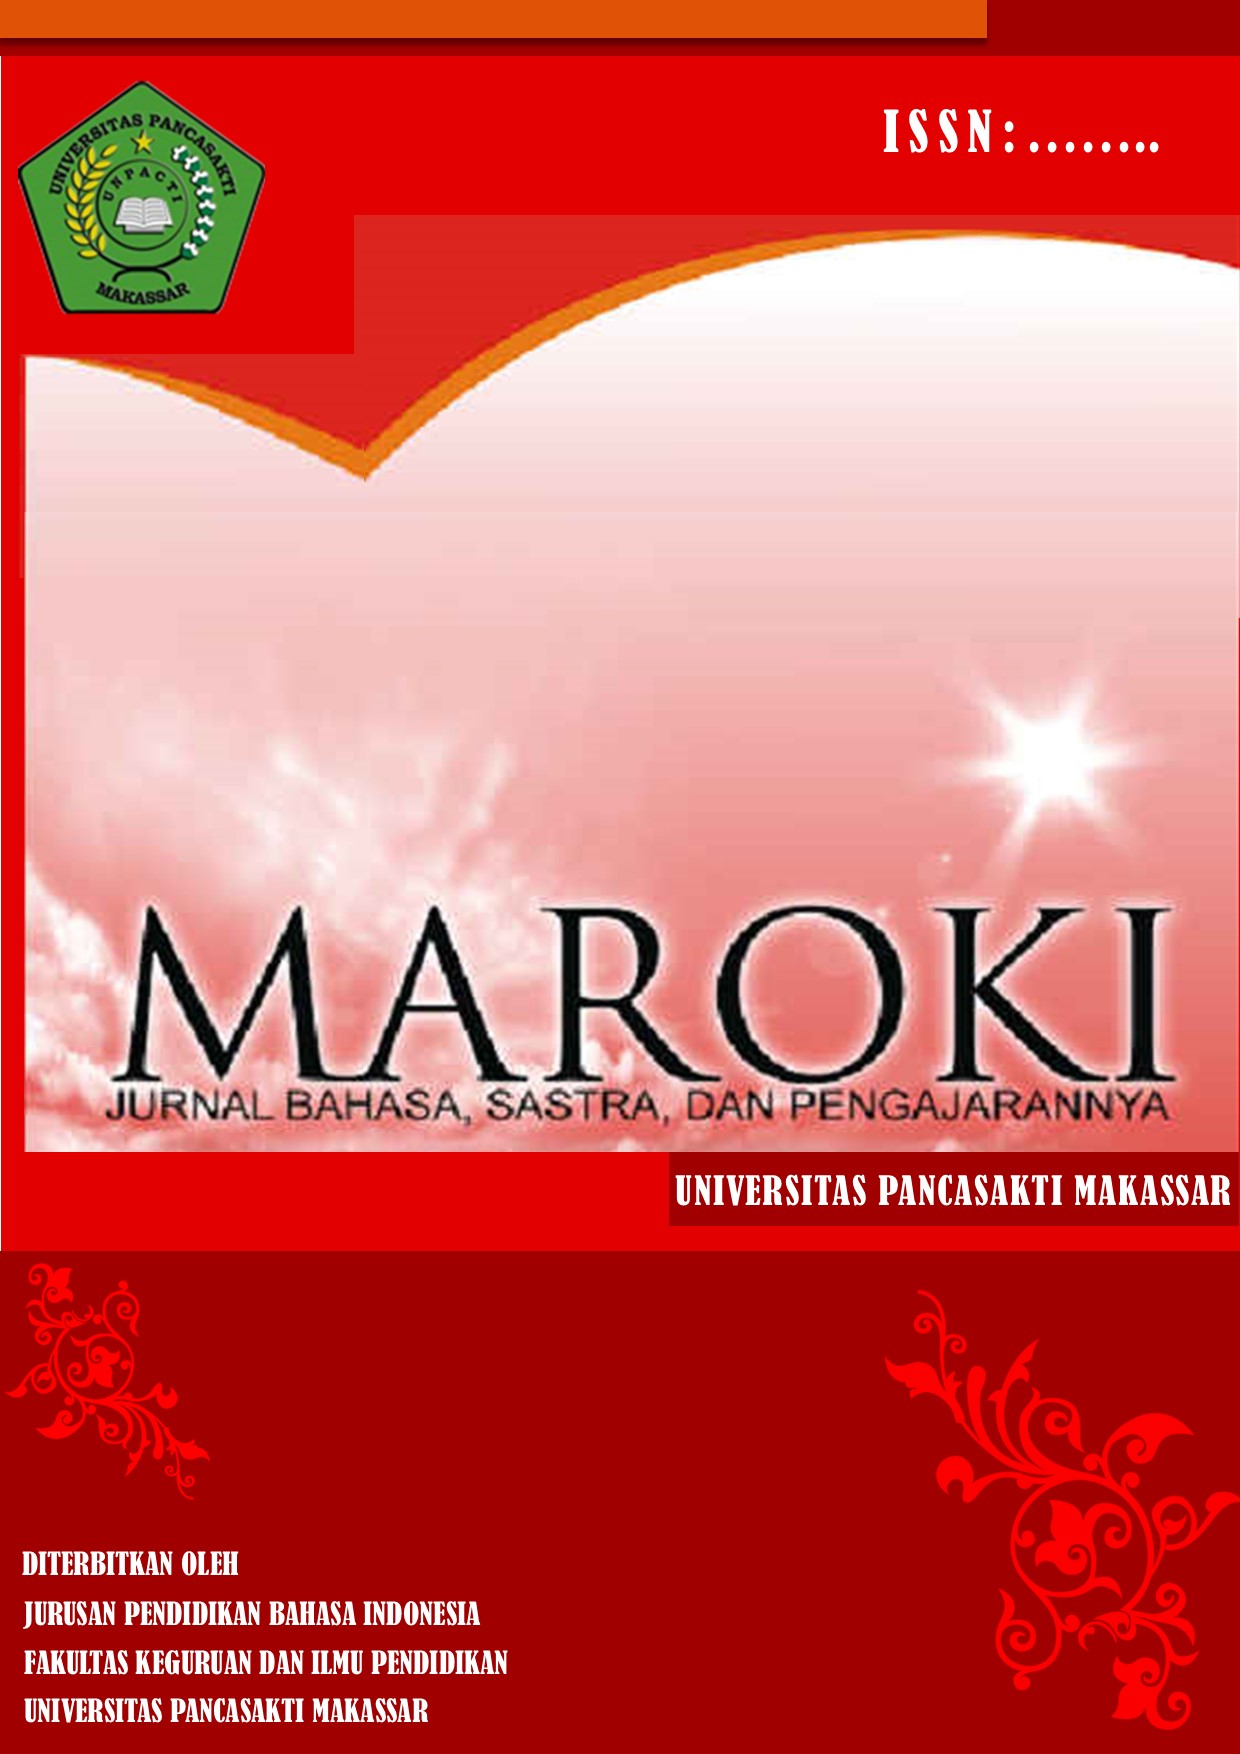 Jurnal Maroki adalah Jurnal yang terbit 2 kali dalam setahun. Jurnal ini merupakan jurnal yang diterbitkan oleh Program Studi Pendidikan Bahasa Indonesia Universitas Pancasakti Makassar